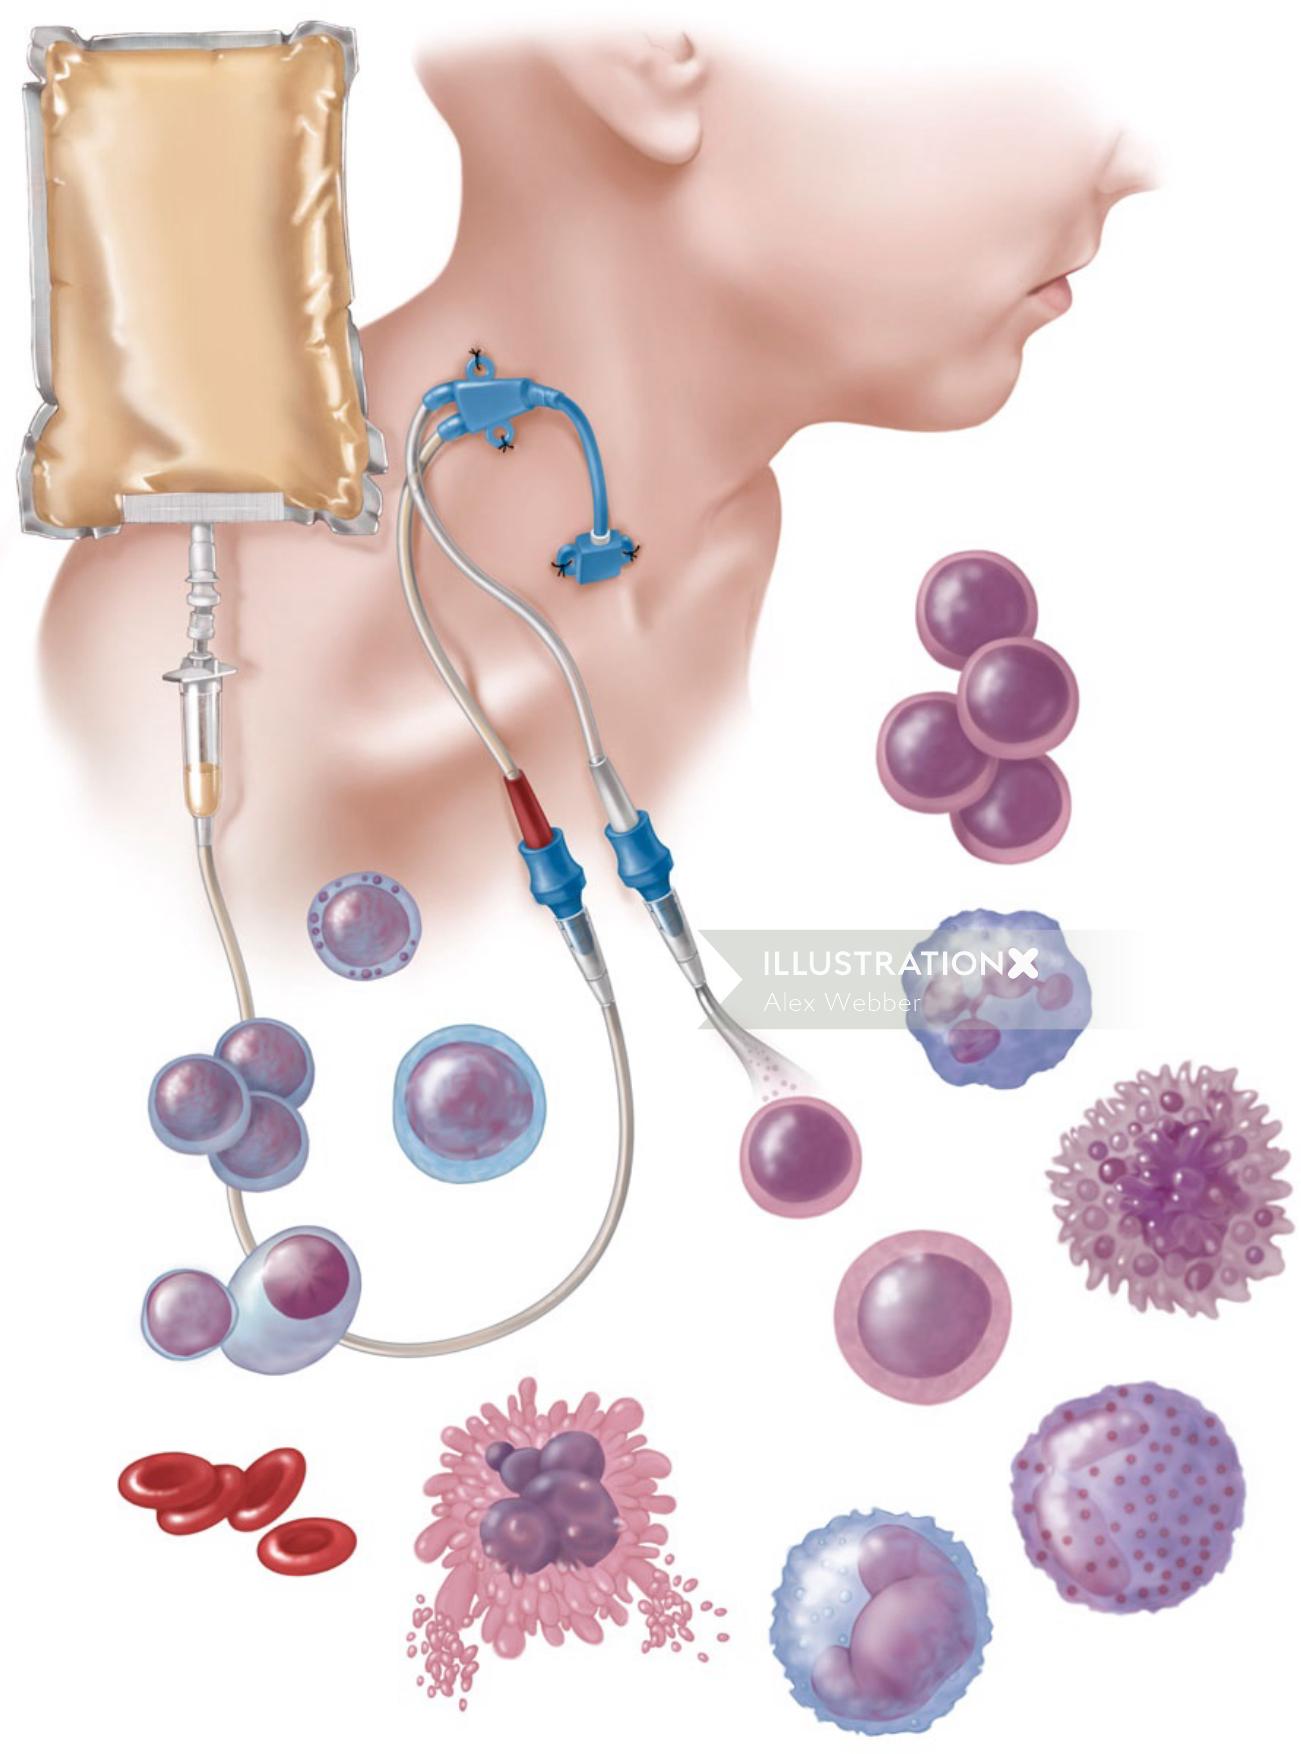 造血幹細胞移植の参考情報